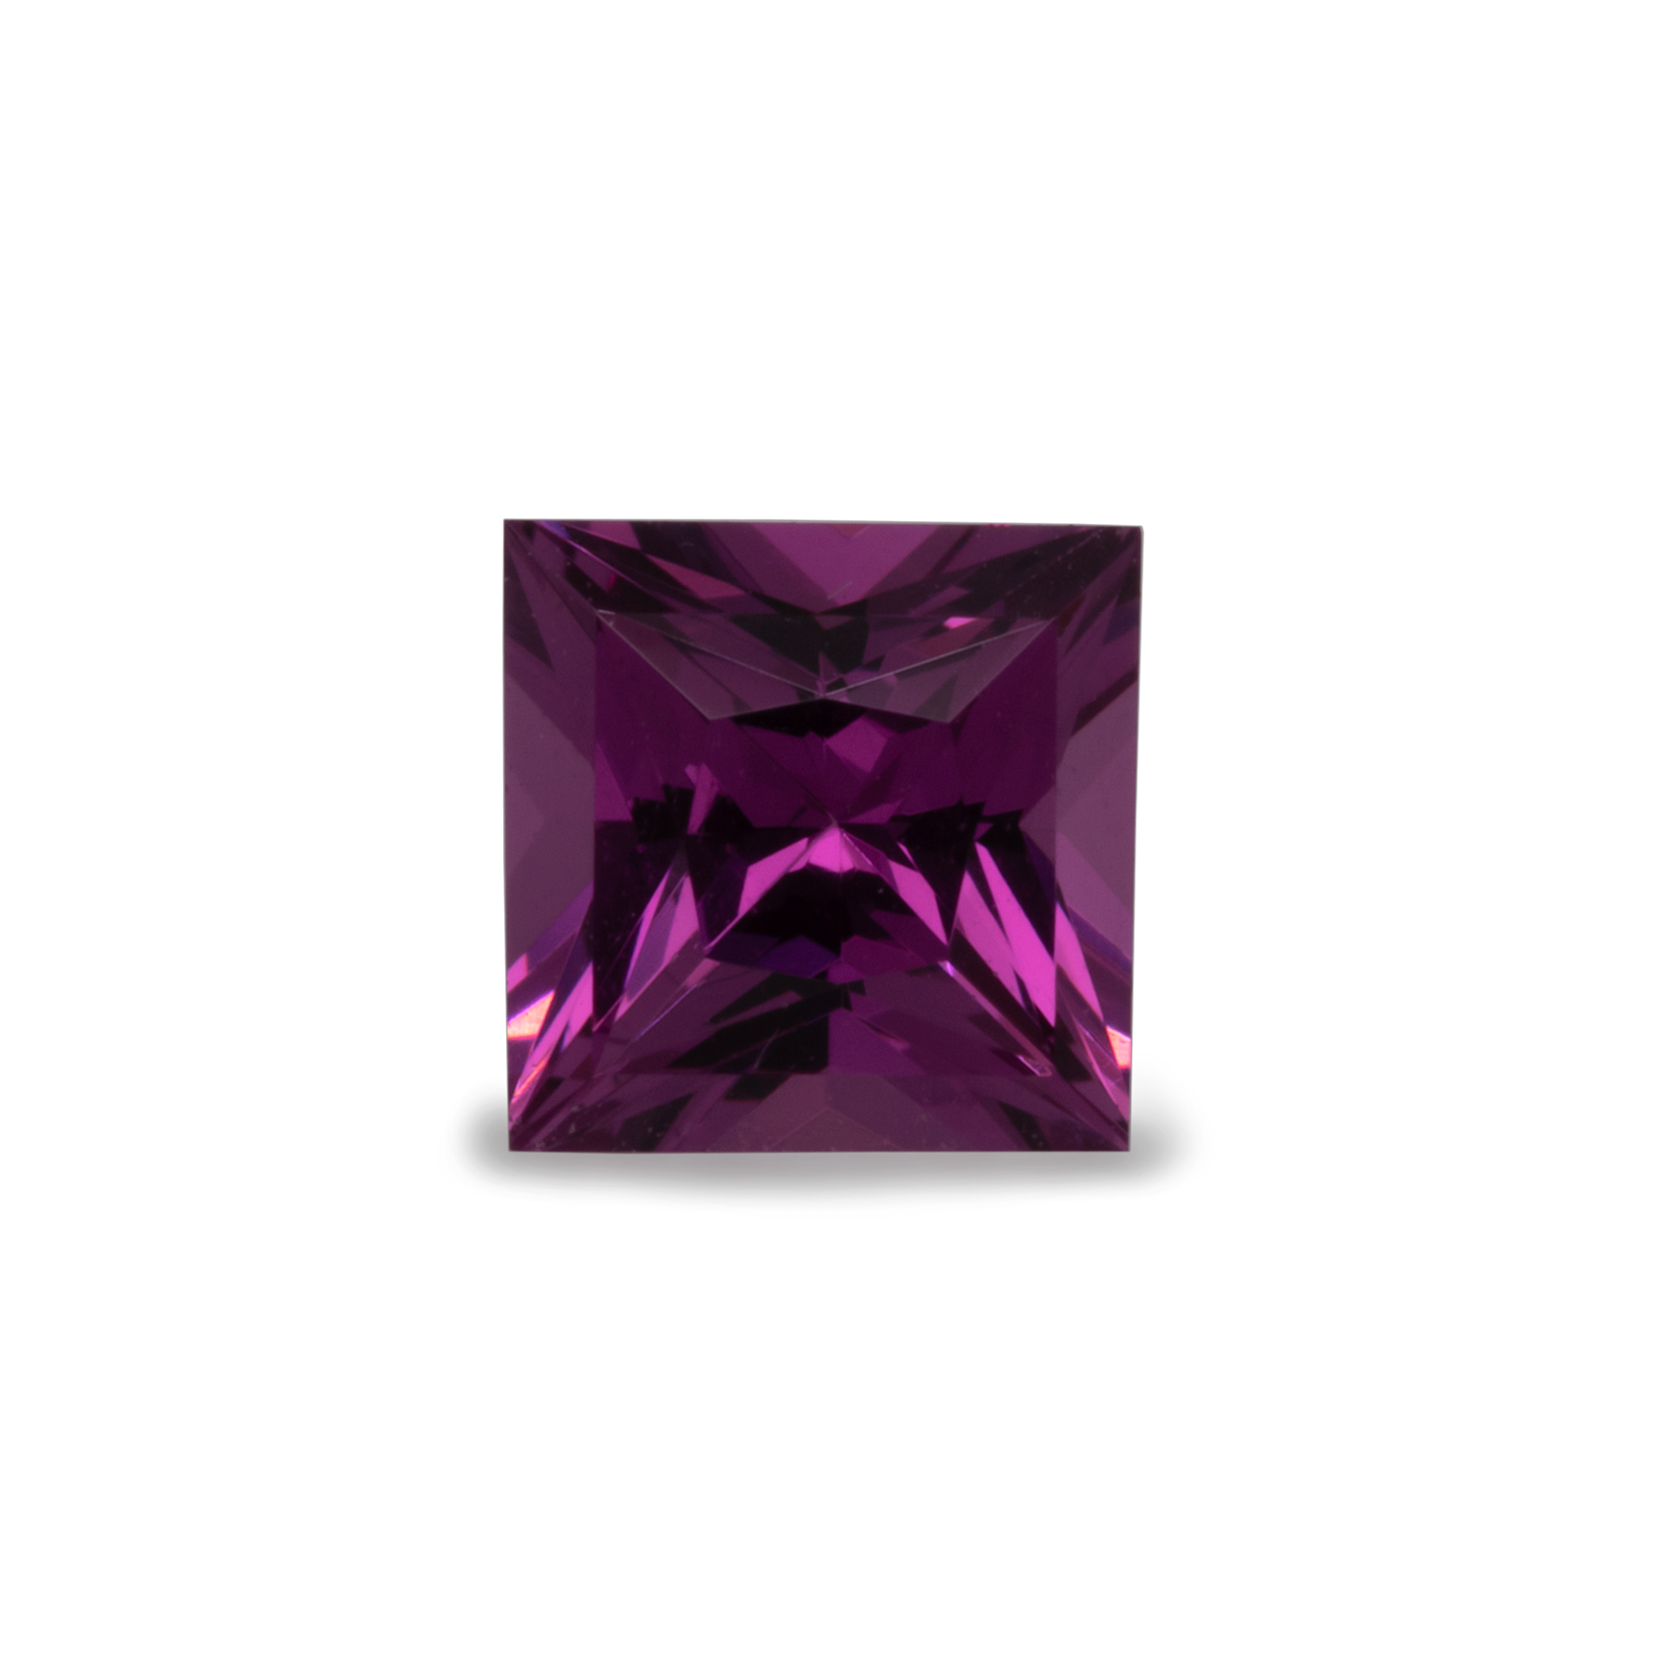 Royal Purple Garnet - purple, square, 4x4 mm, 0.38-0.42 cts, No. RP28001